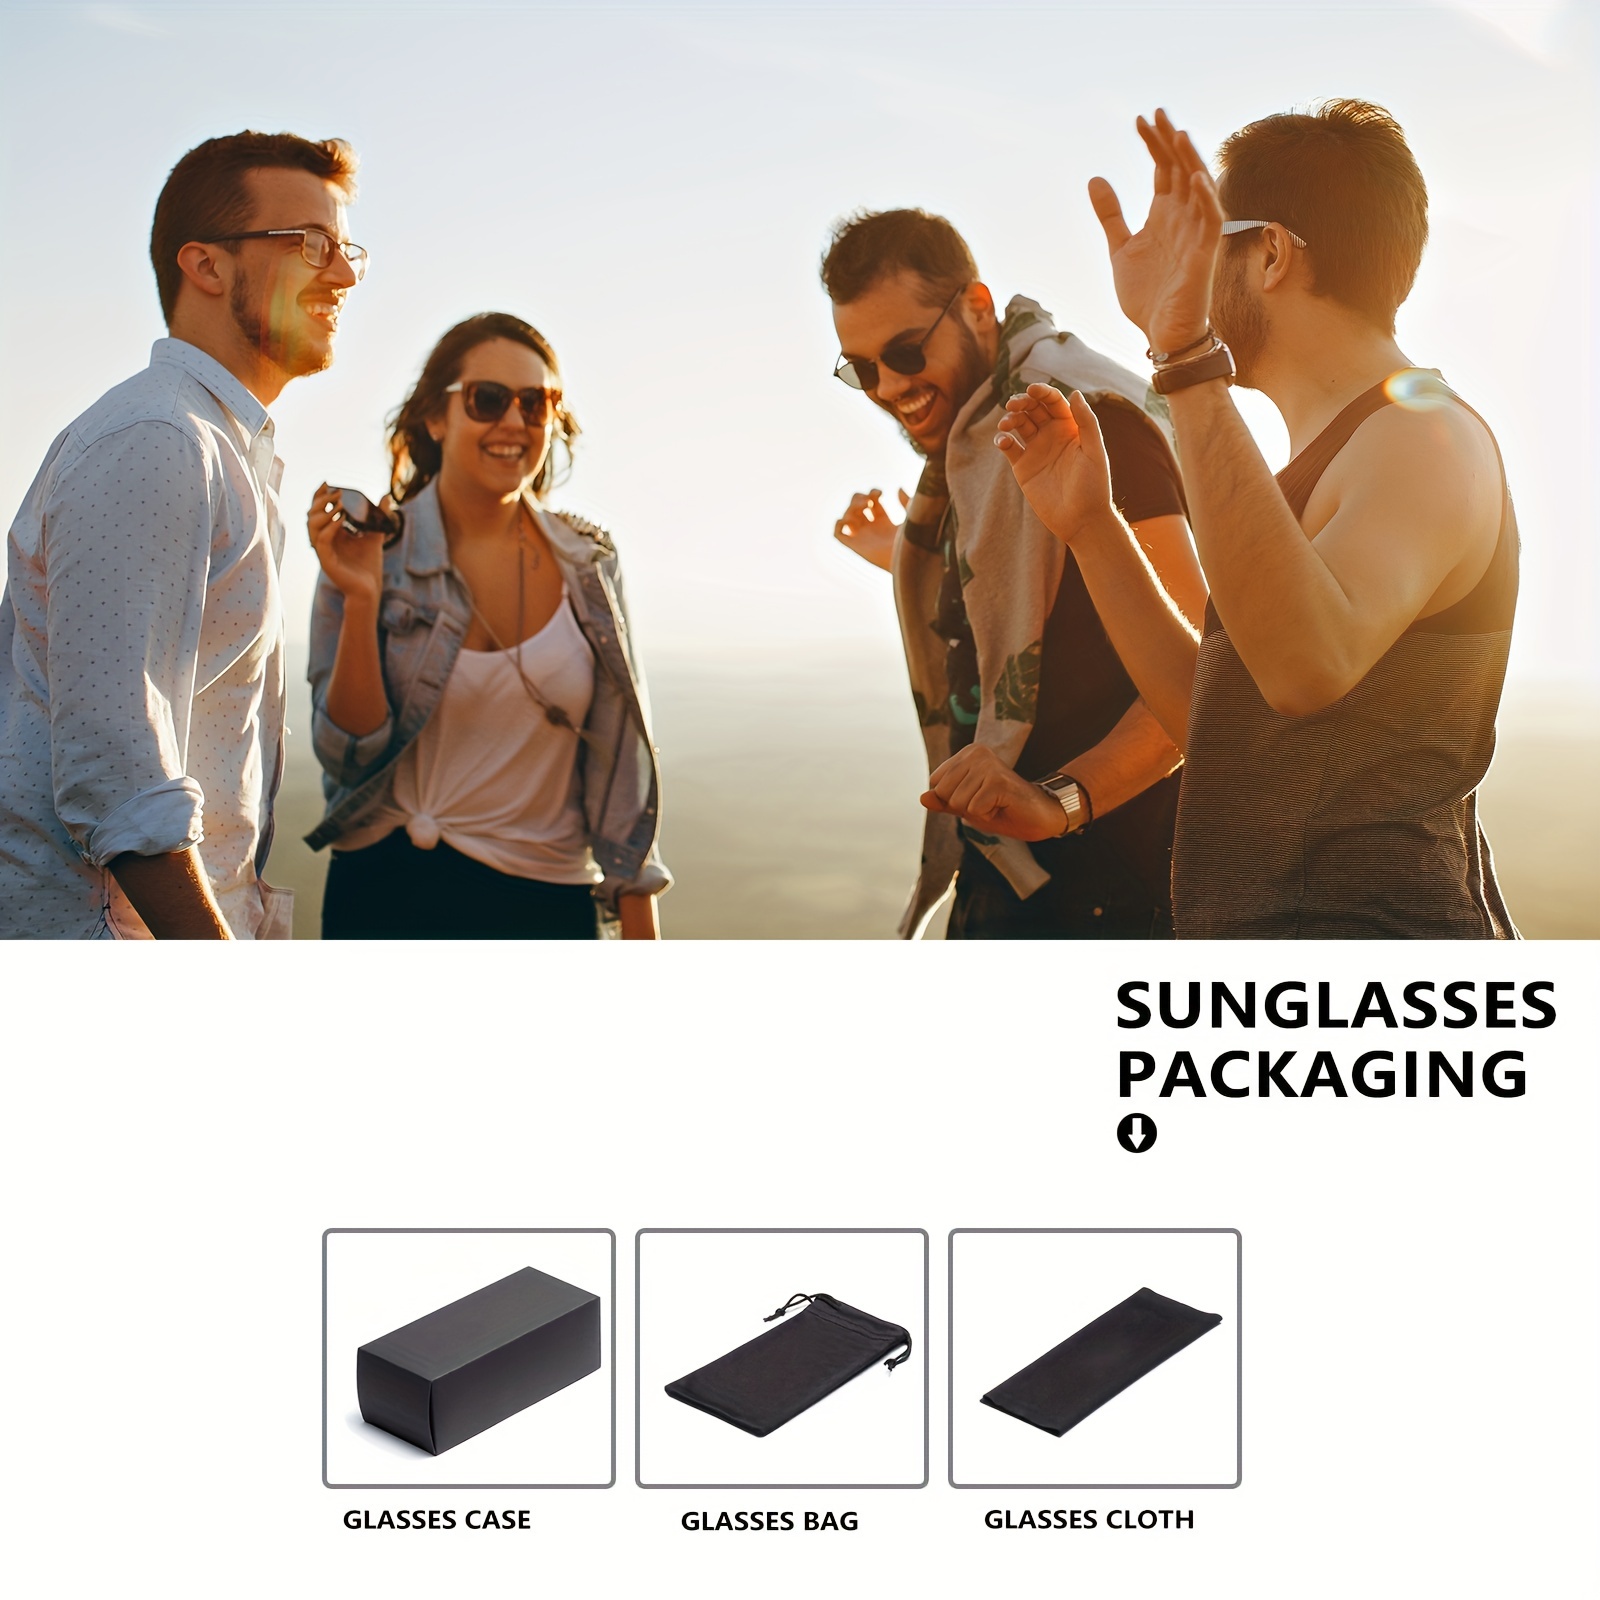 Classic and fashionable sunglasses for men's retro UV resistant sunglasses